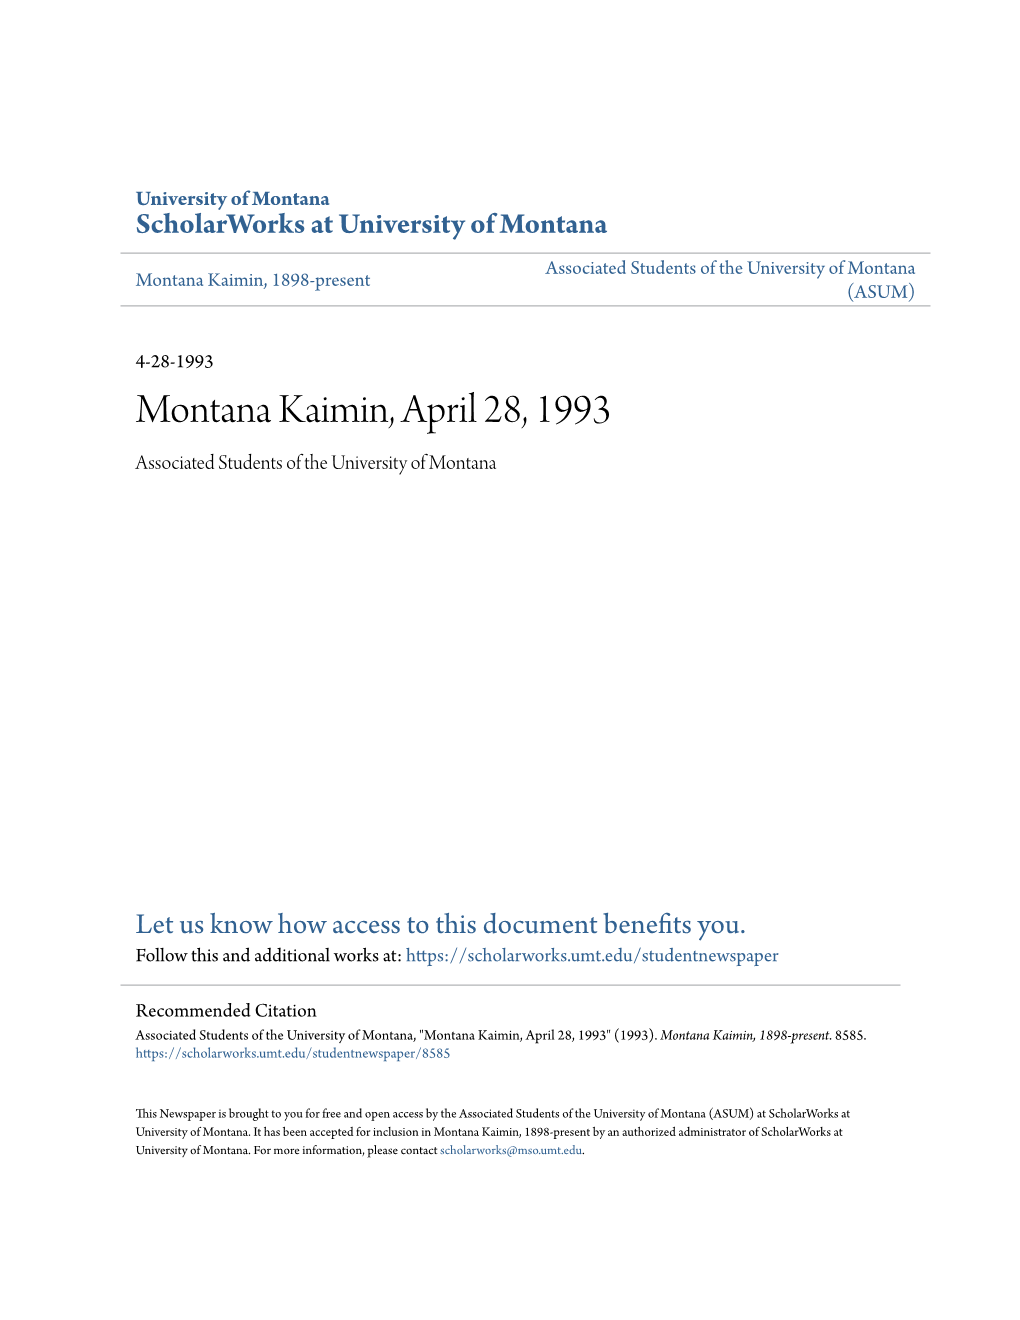 Montana Kaimin, April 28, 1993 Associated Students of the University of Montana